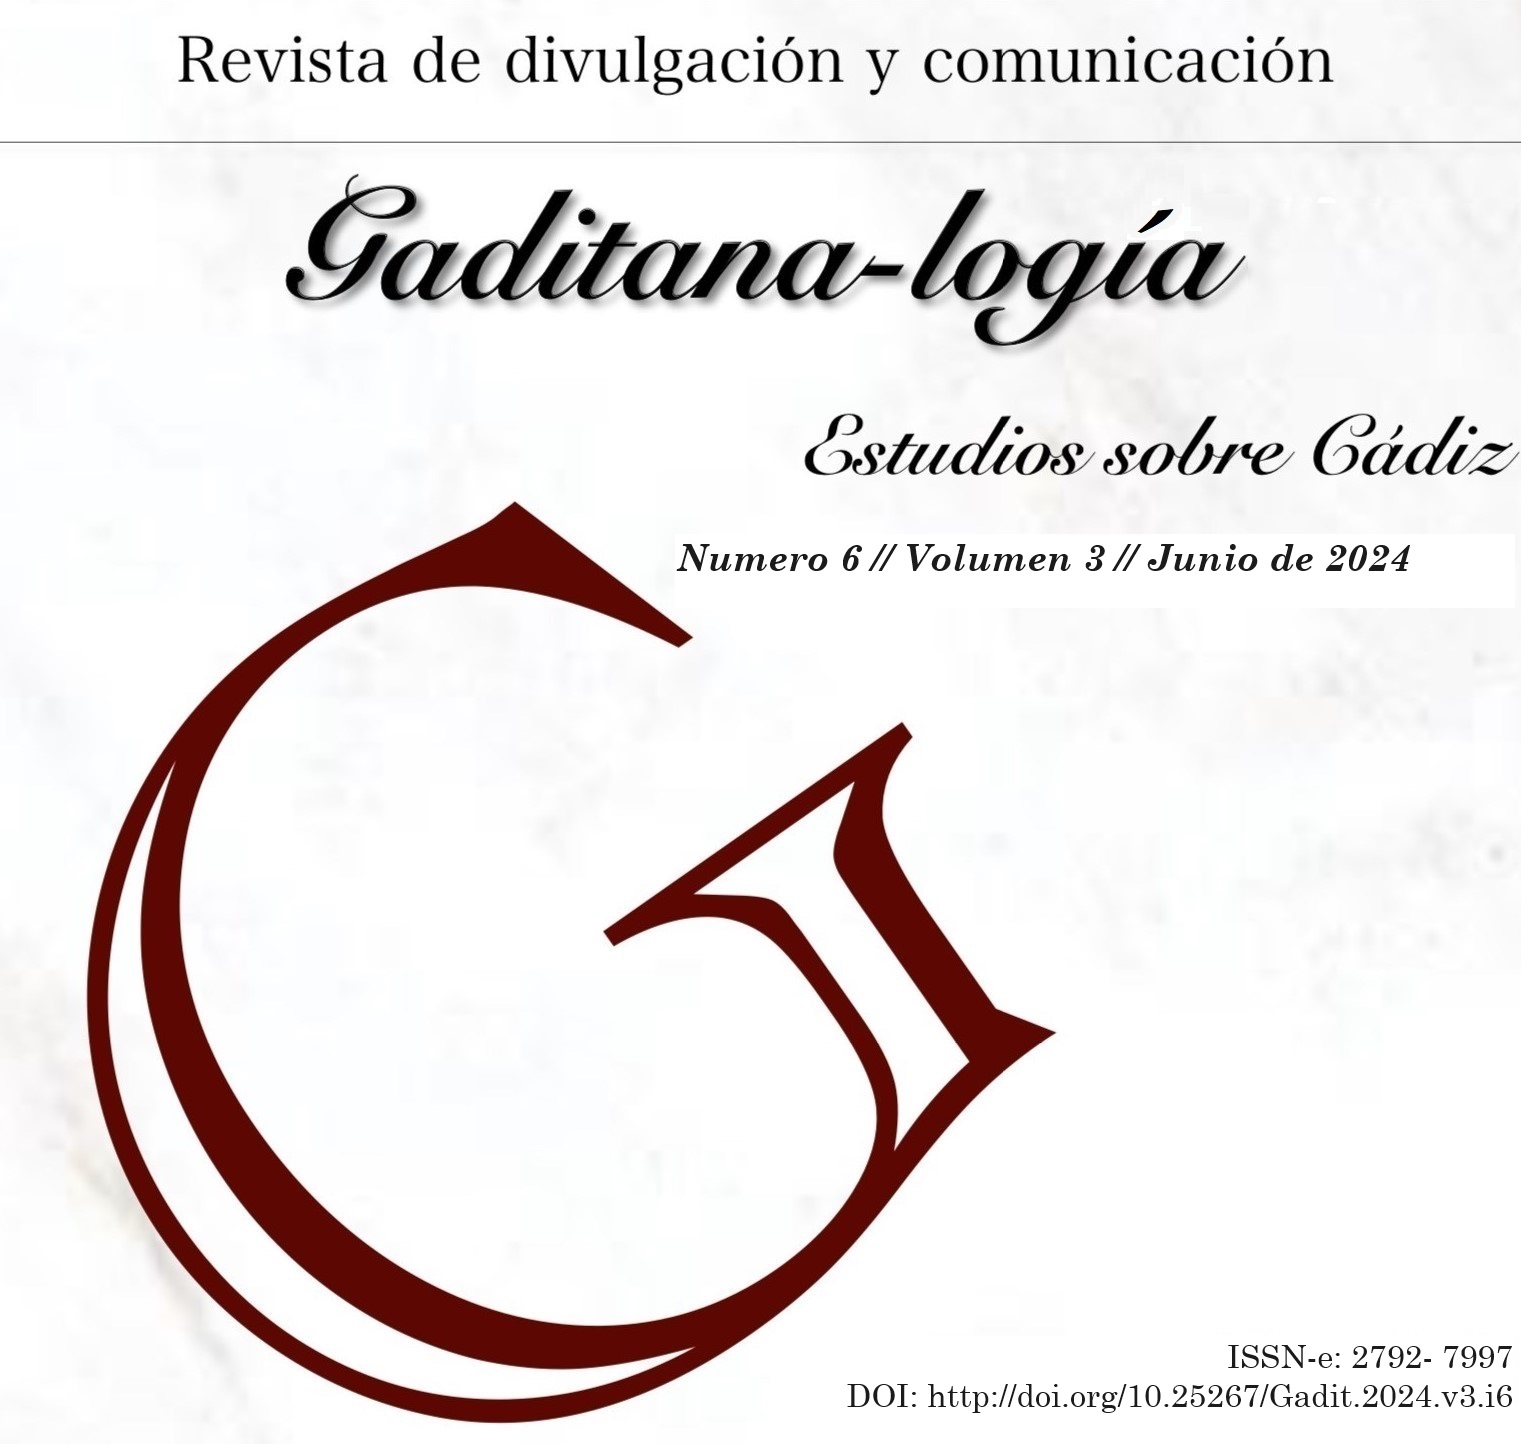 Gaditana-logía 6